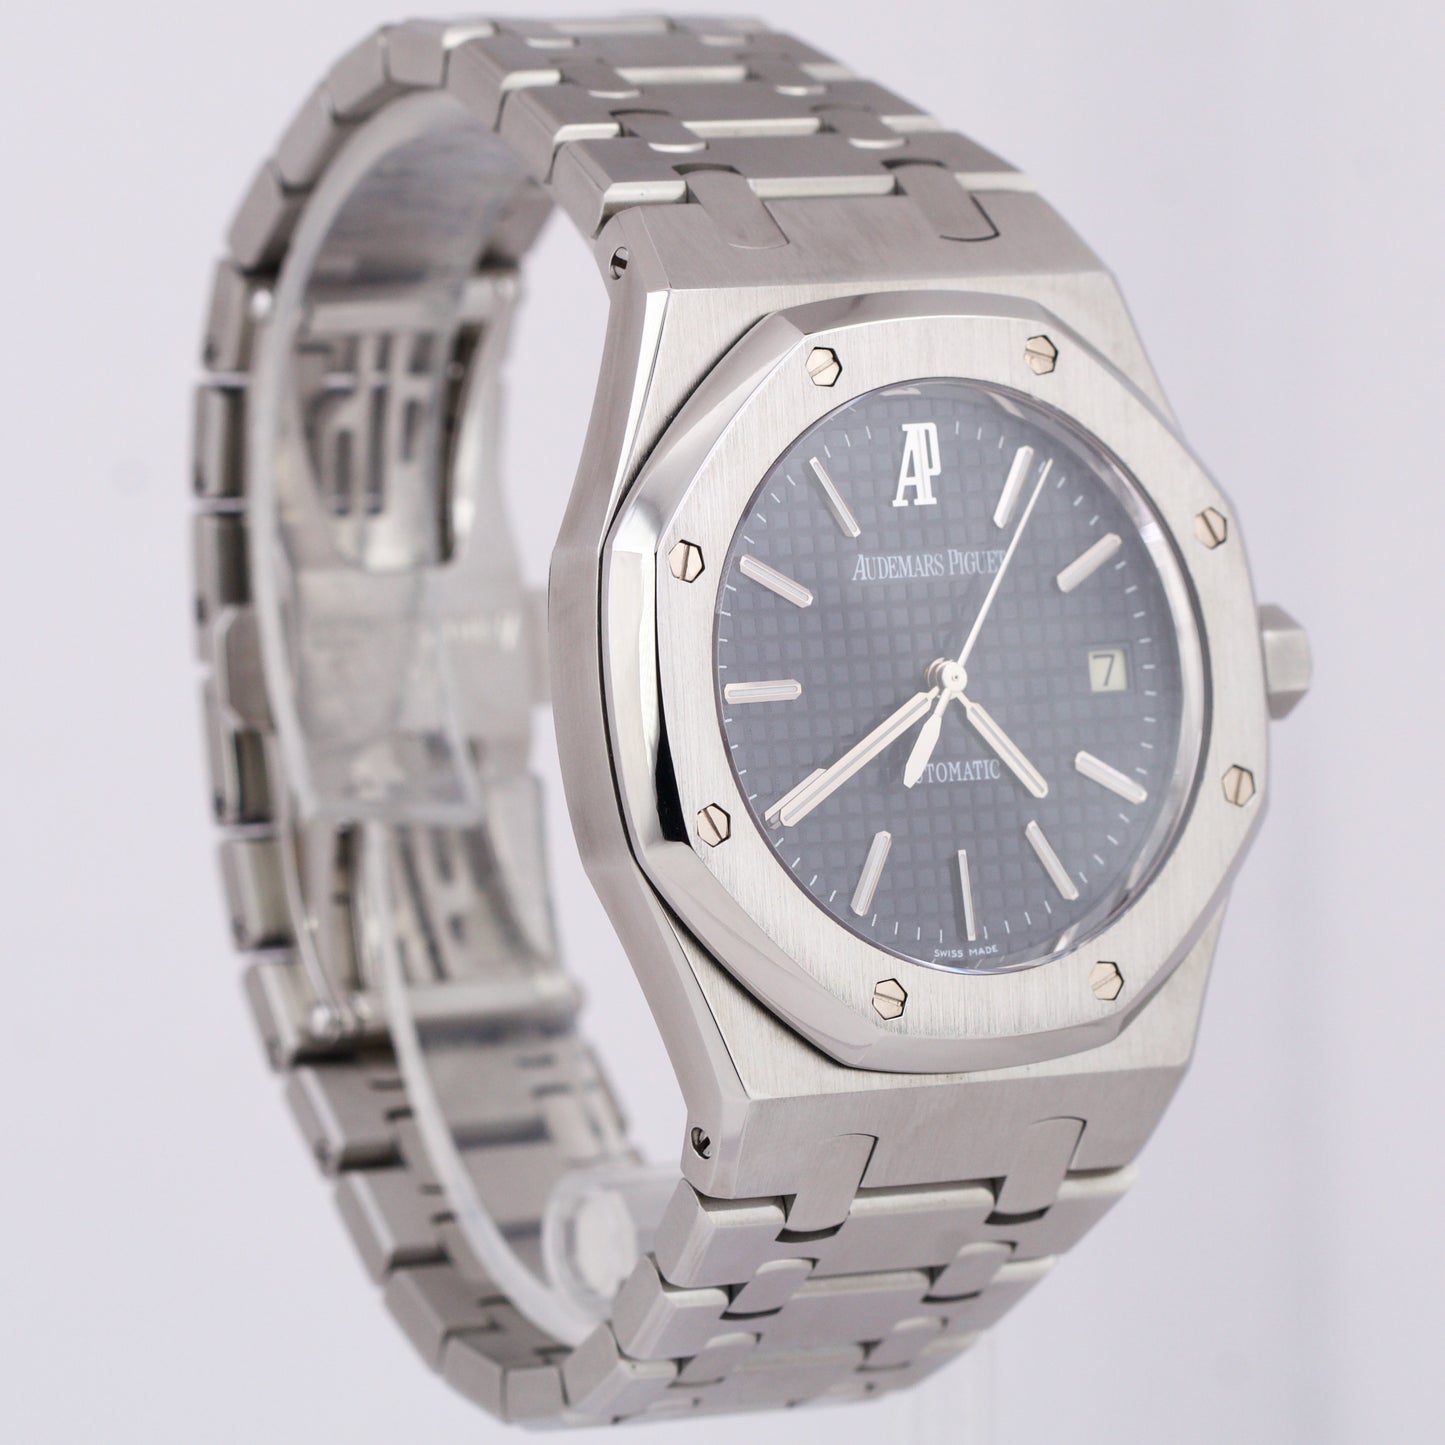 Audemars Piguet Royal Oak Blue 39mm Stainless Steel Date Automatic Watch 15300ST